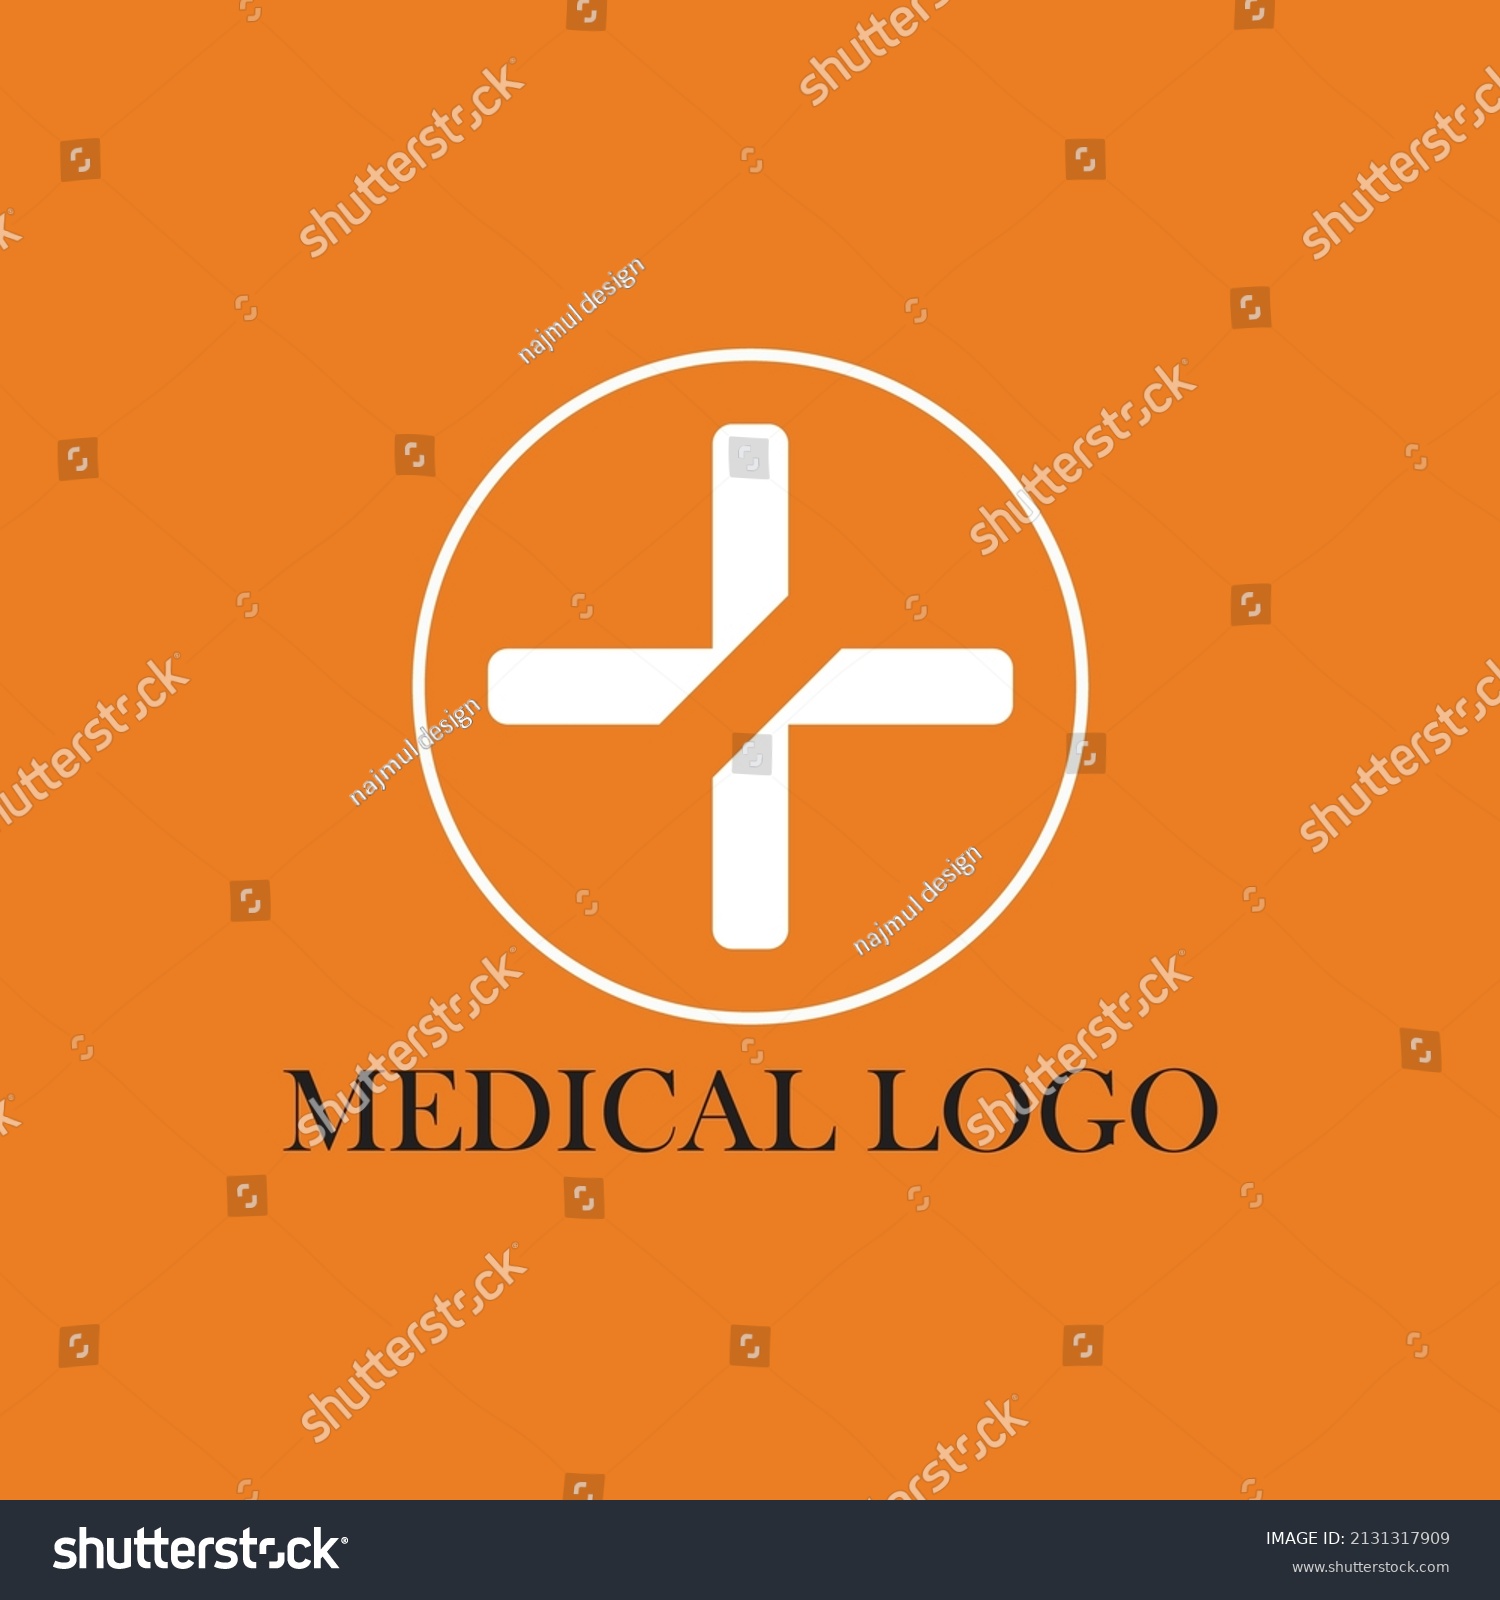 Minimalist Medical logo Design and Vector Logo - Royalty Free Stock ...